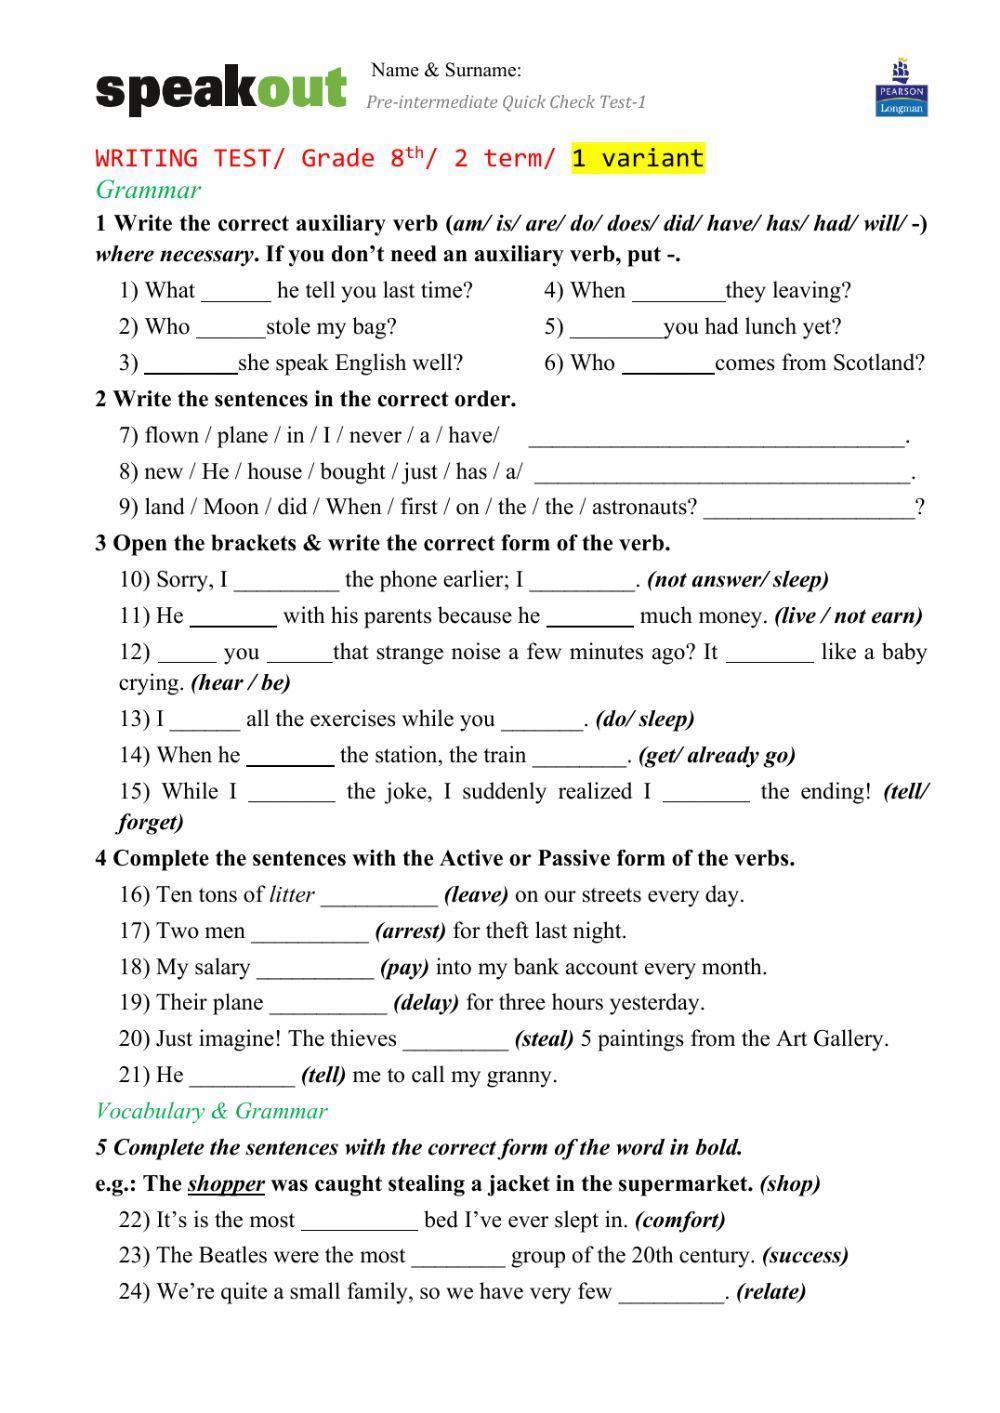 WRITING TEST- Grade 8th- 2 term- 1 variant